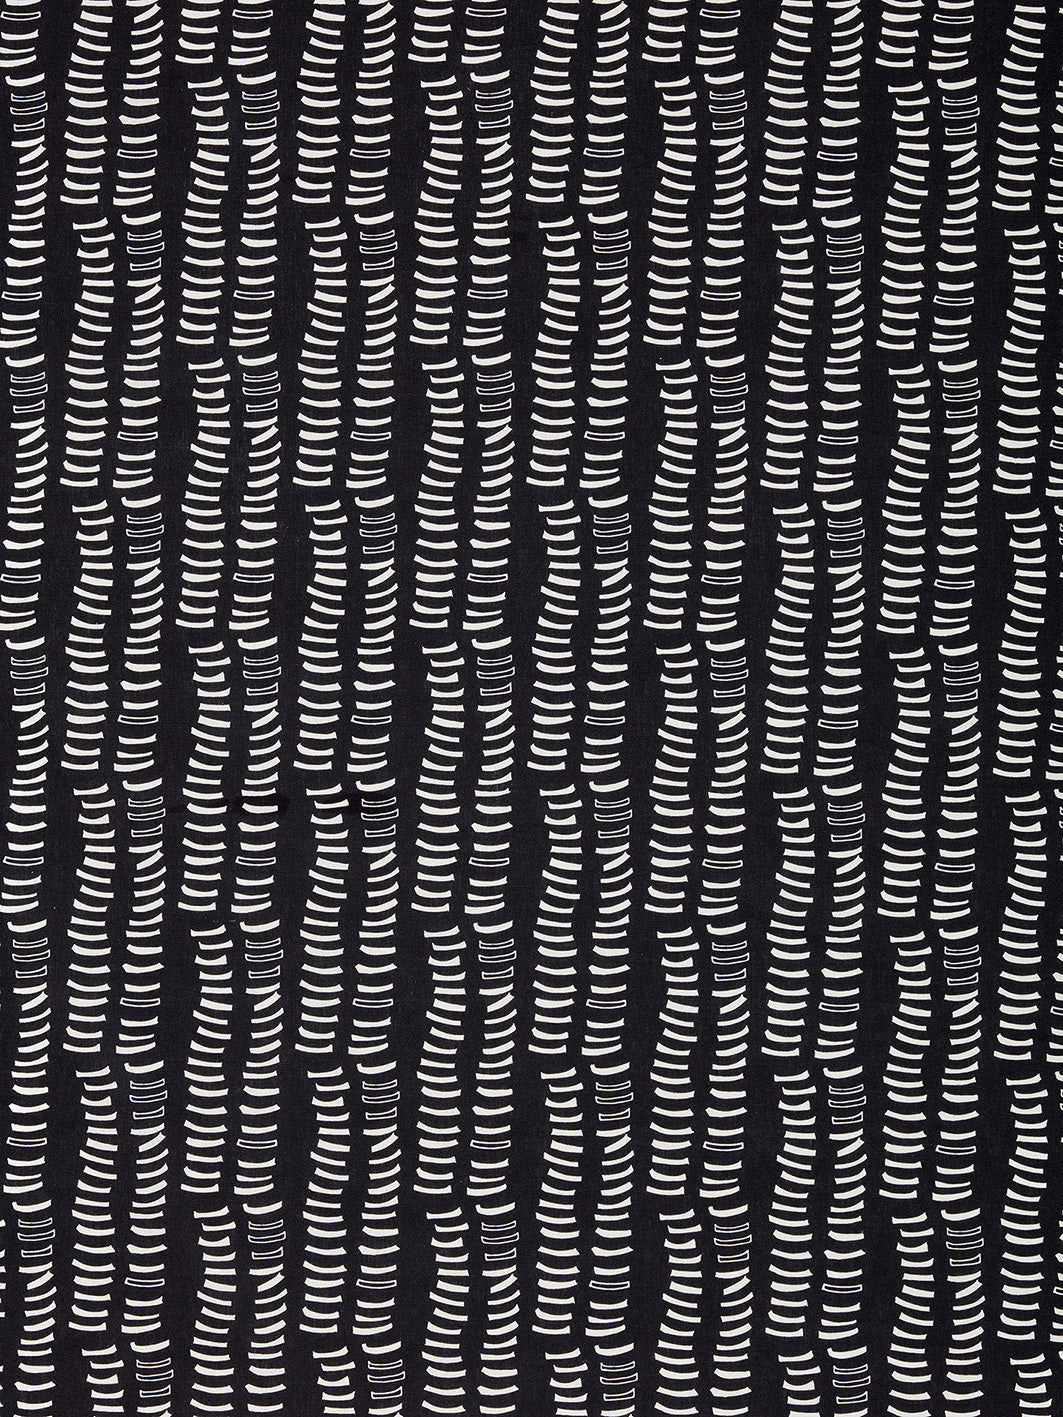 Graphic Graphic Adam's Rib Pattern Screen Printed Linen Cotton Canvas Fabric in Black and White